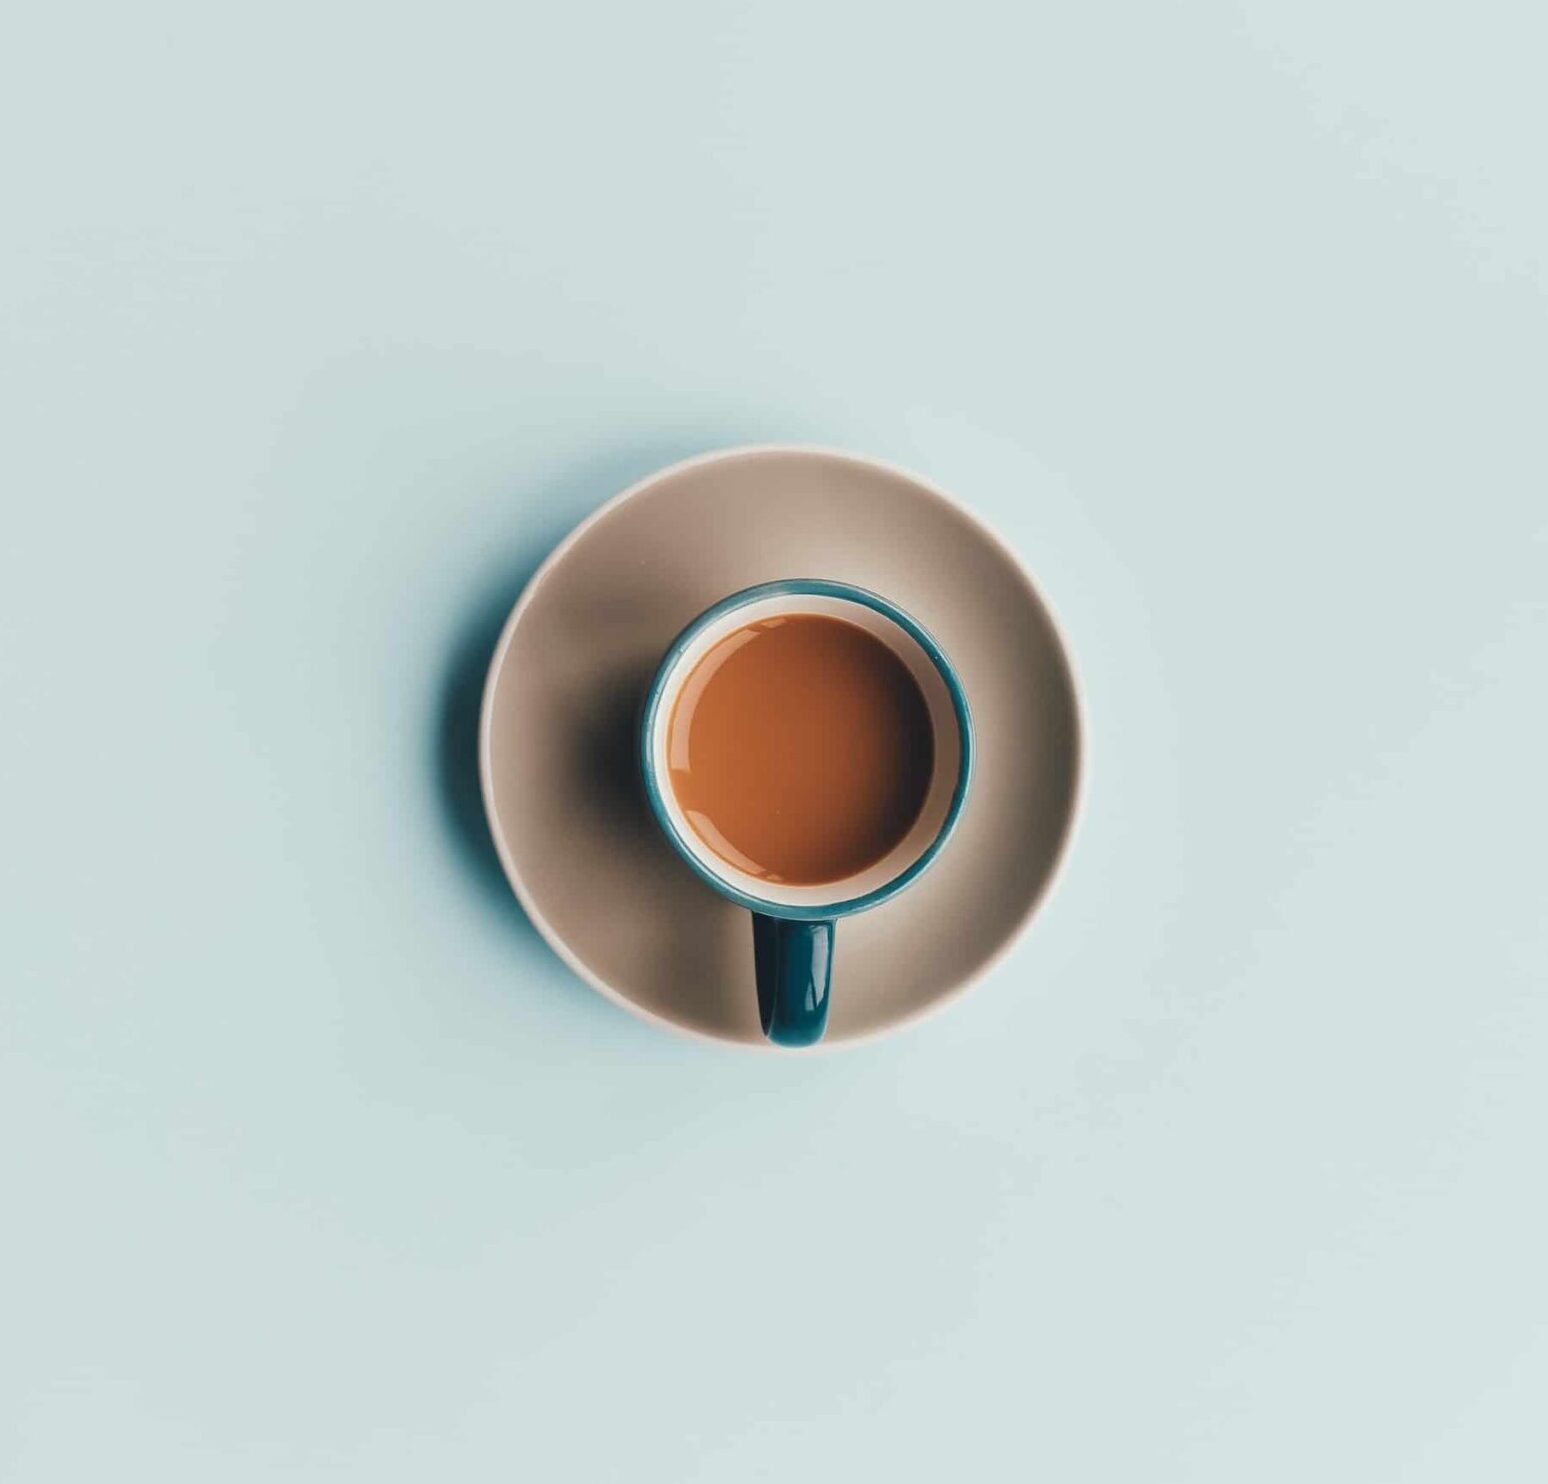 kaffee yerba mate kaffee ersatz bio mate online kaufen scaled 1